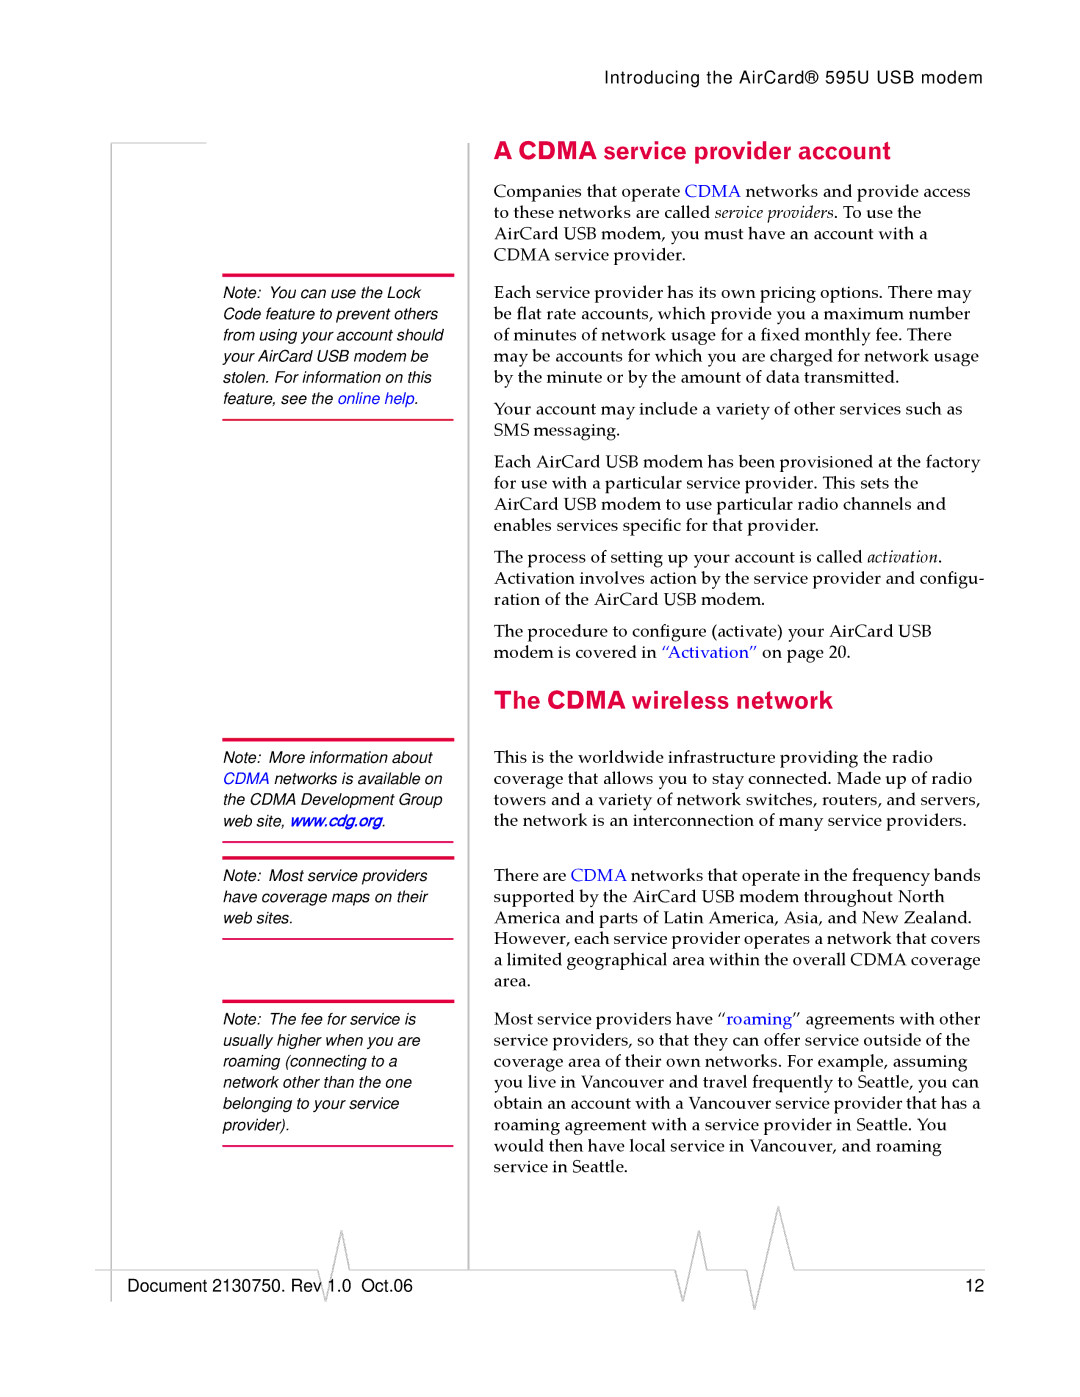 Sierra Wireless 595U manual Cdma service provider account, Cdma wireless network 